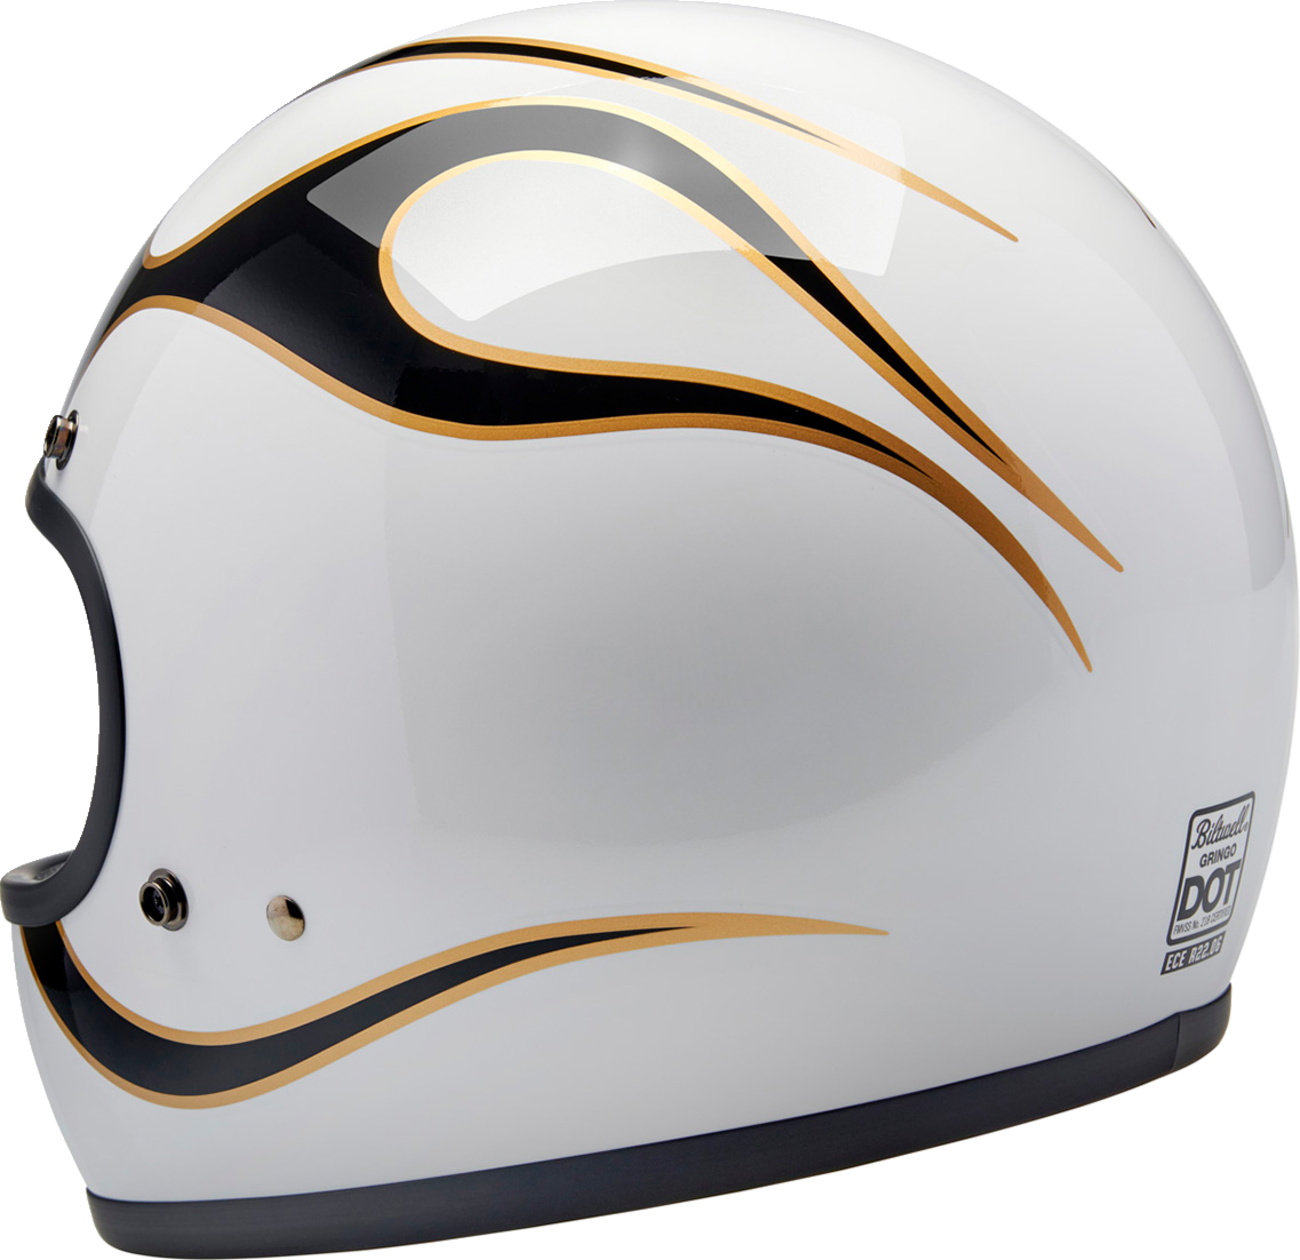 BILTWELL Gringo Helmet - Flames - White/Black - Medium 1002-561-503